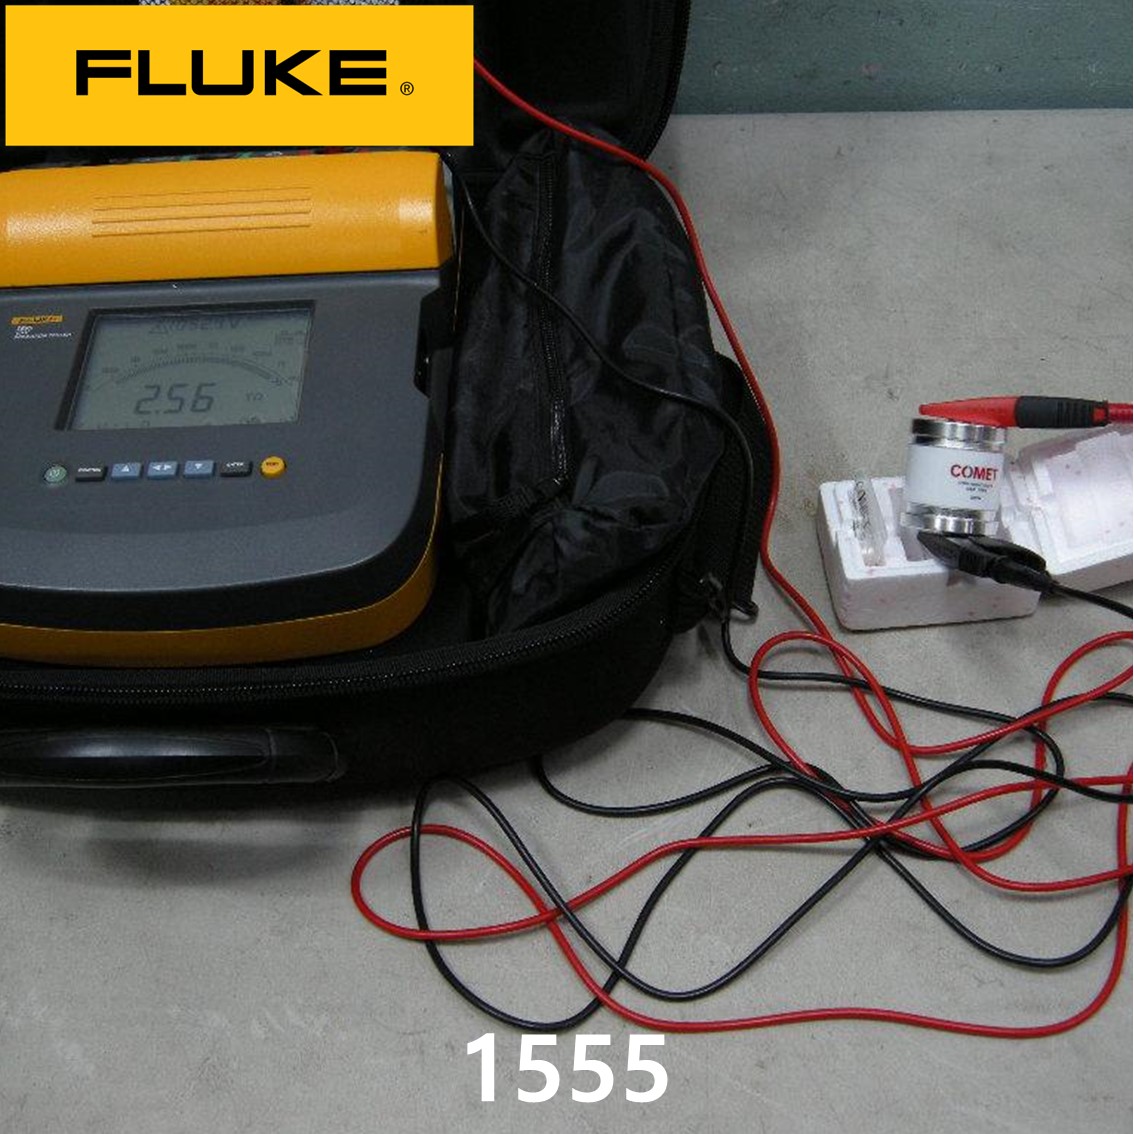 [ FLUKE 1555 ]  정품 플루크 절연저항계 1555 (10KV), 절연시험기, 절연저항계